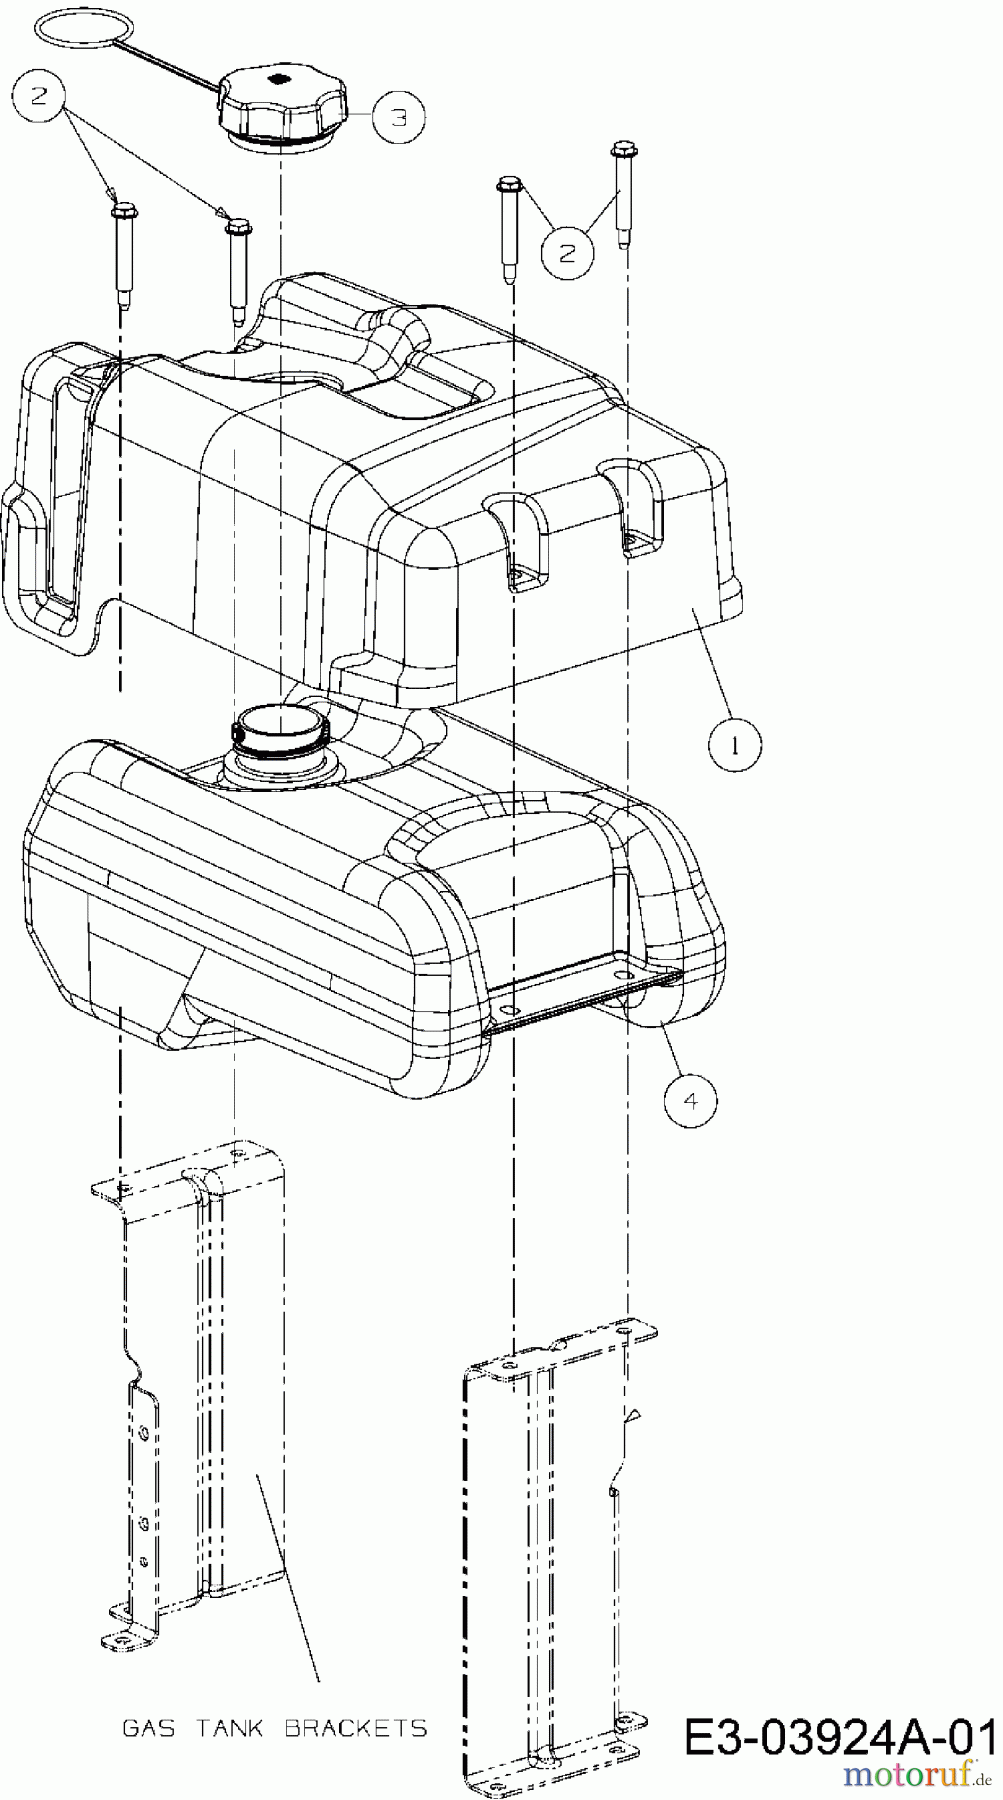  Cub Cadet Petrol mower self propelled Wide Cut E-Start 12AE764U603  (2015) Fuel tank